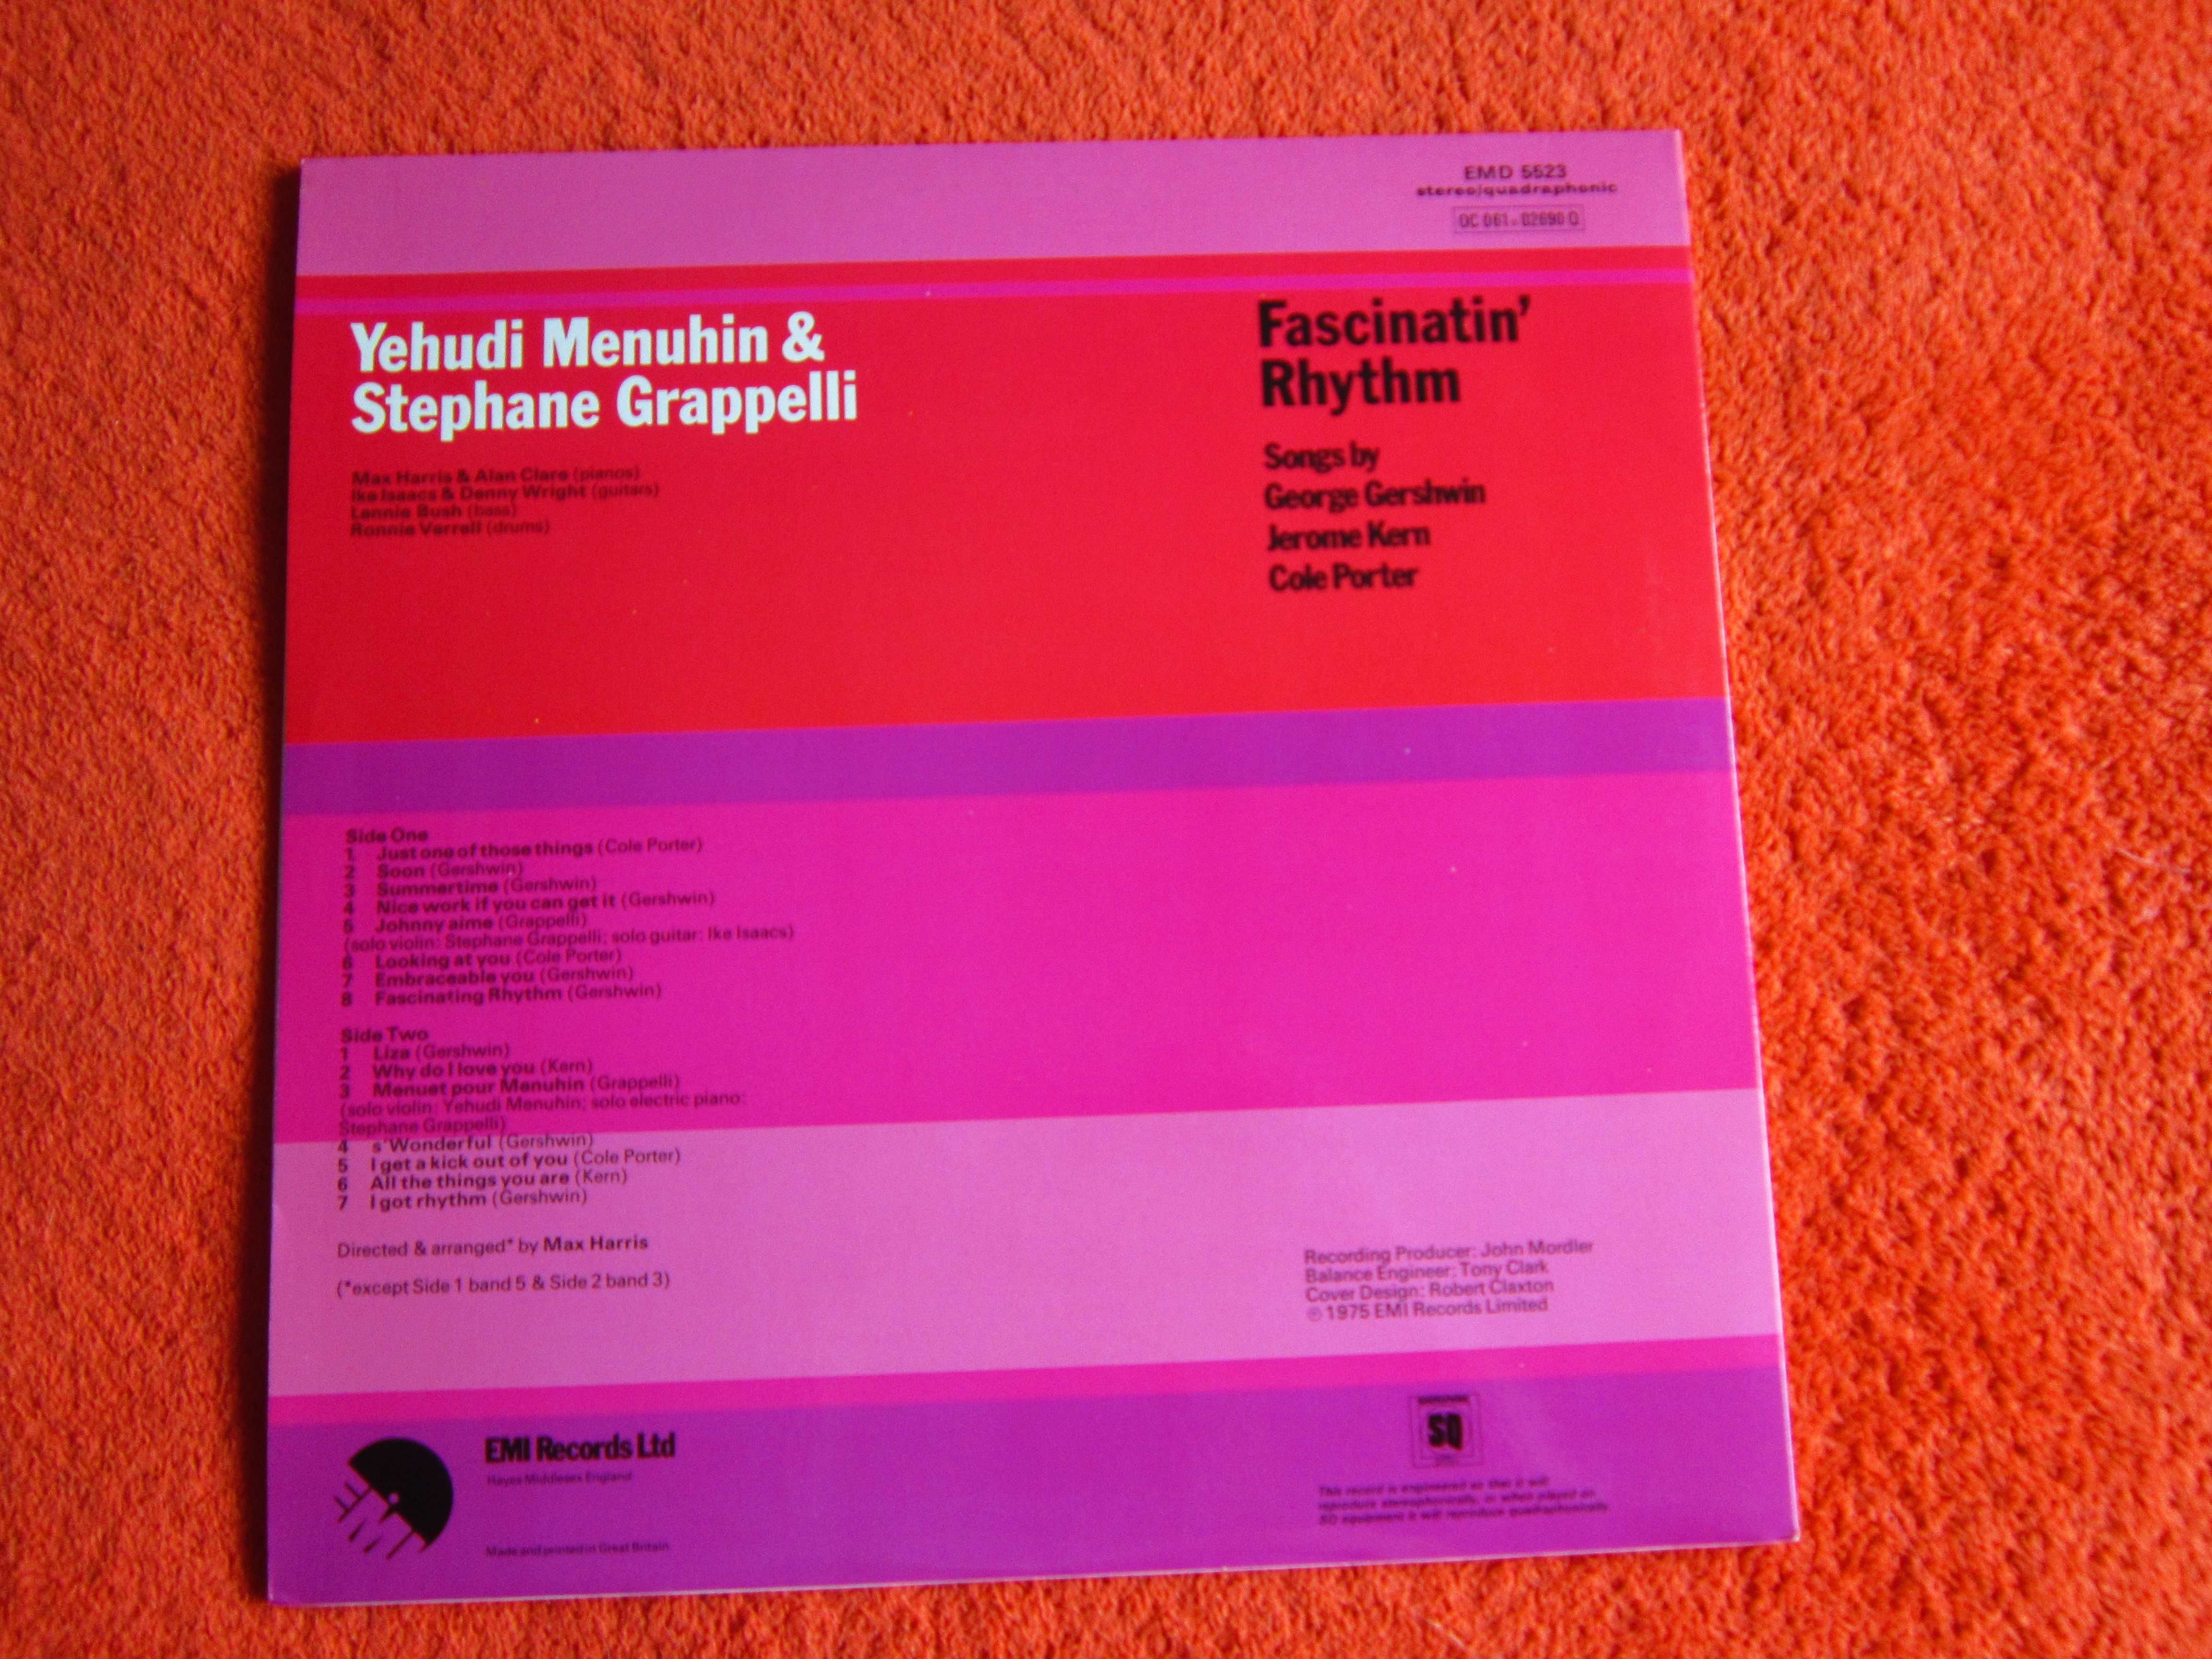 vinil jazz Yehudi Menuhin &Stephane Grappelli-Fascinatin' Rhythm 1975